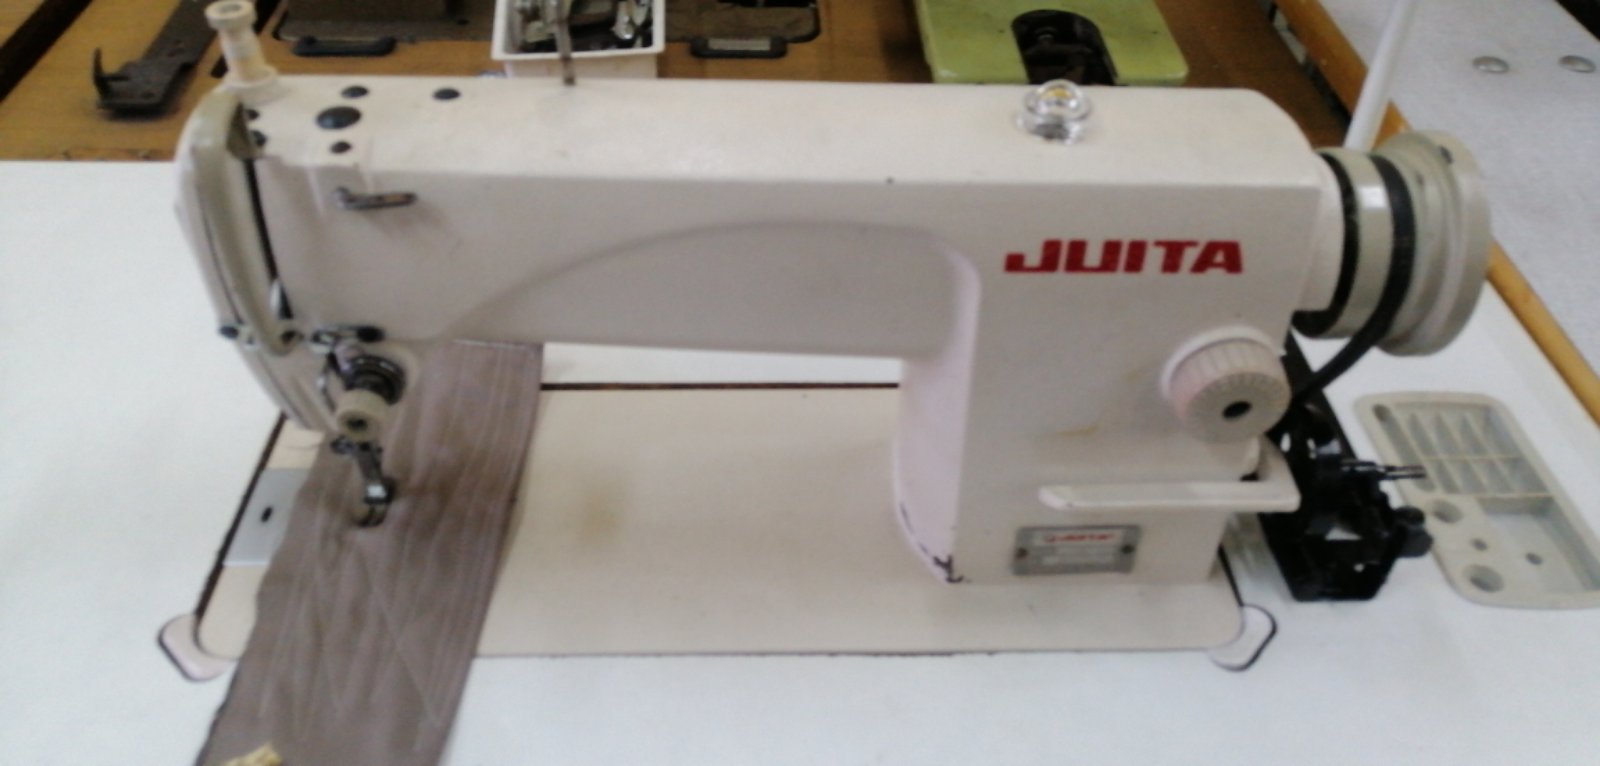 Repair Sevis Juita Hi speed sewing machine 